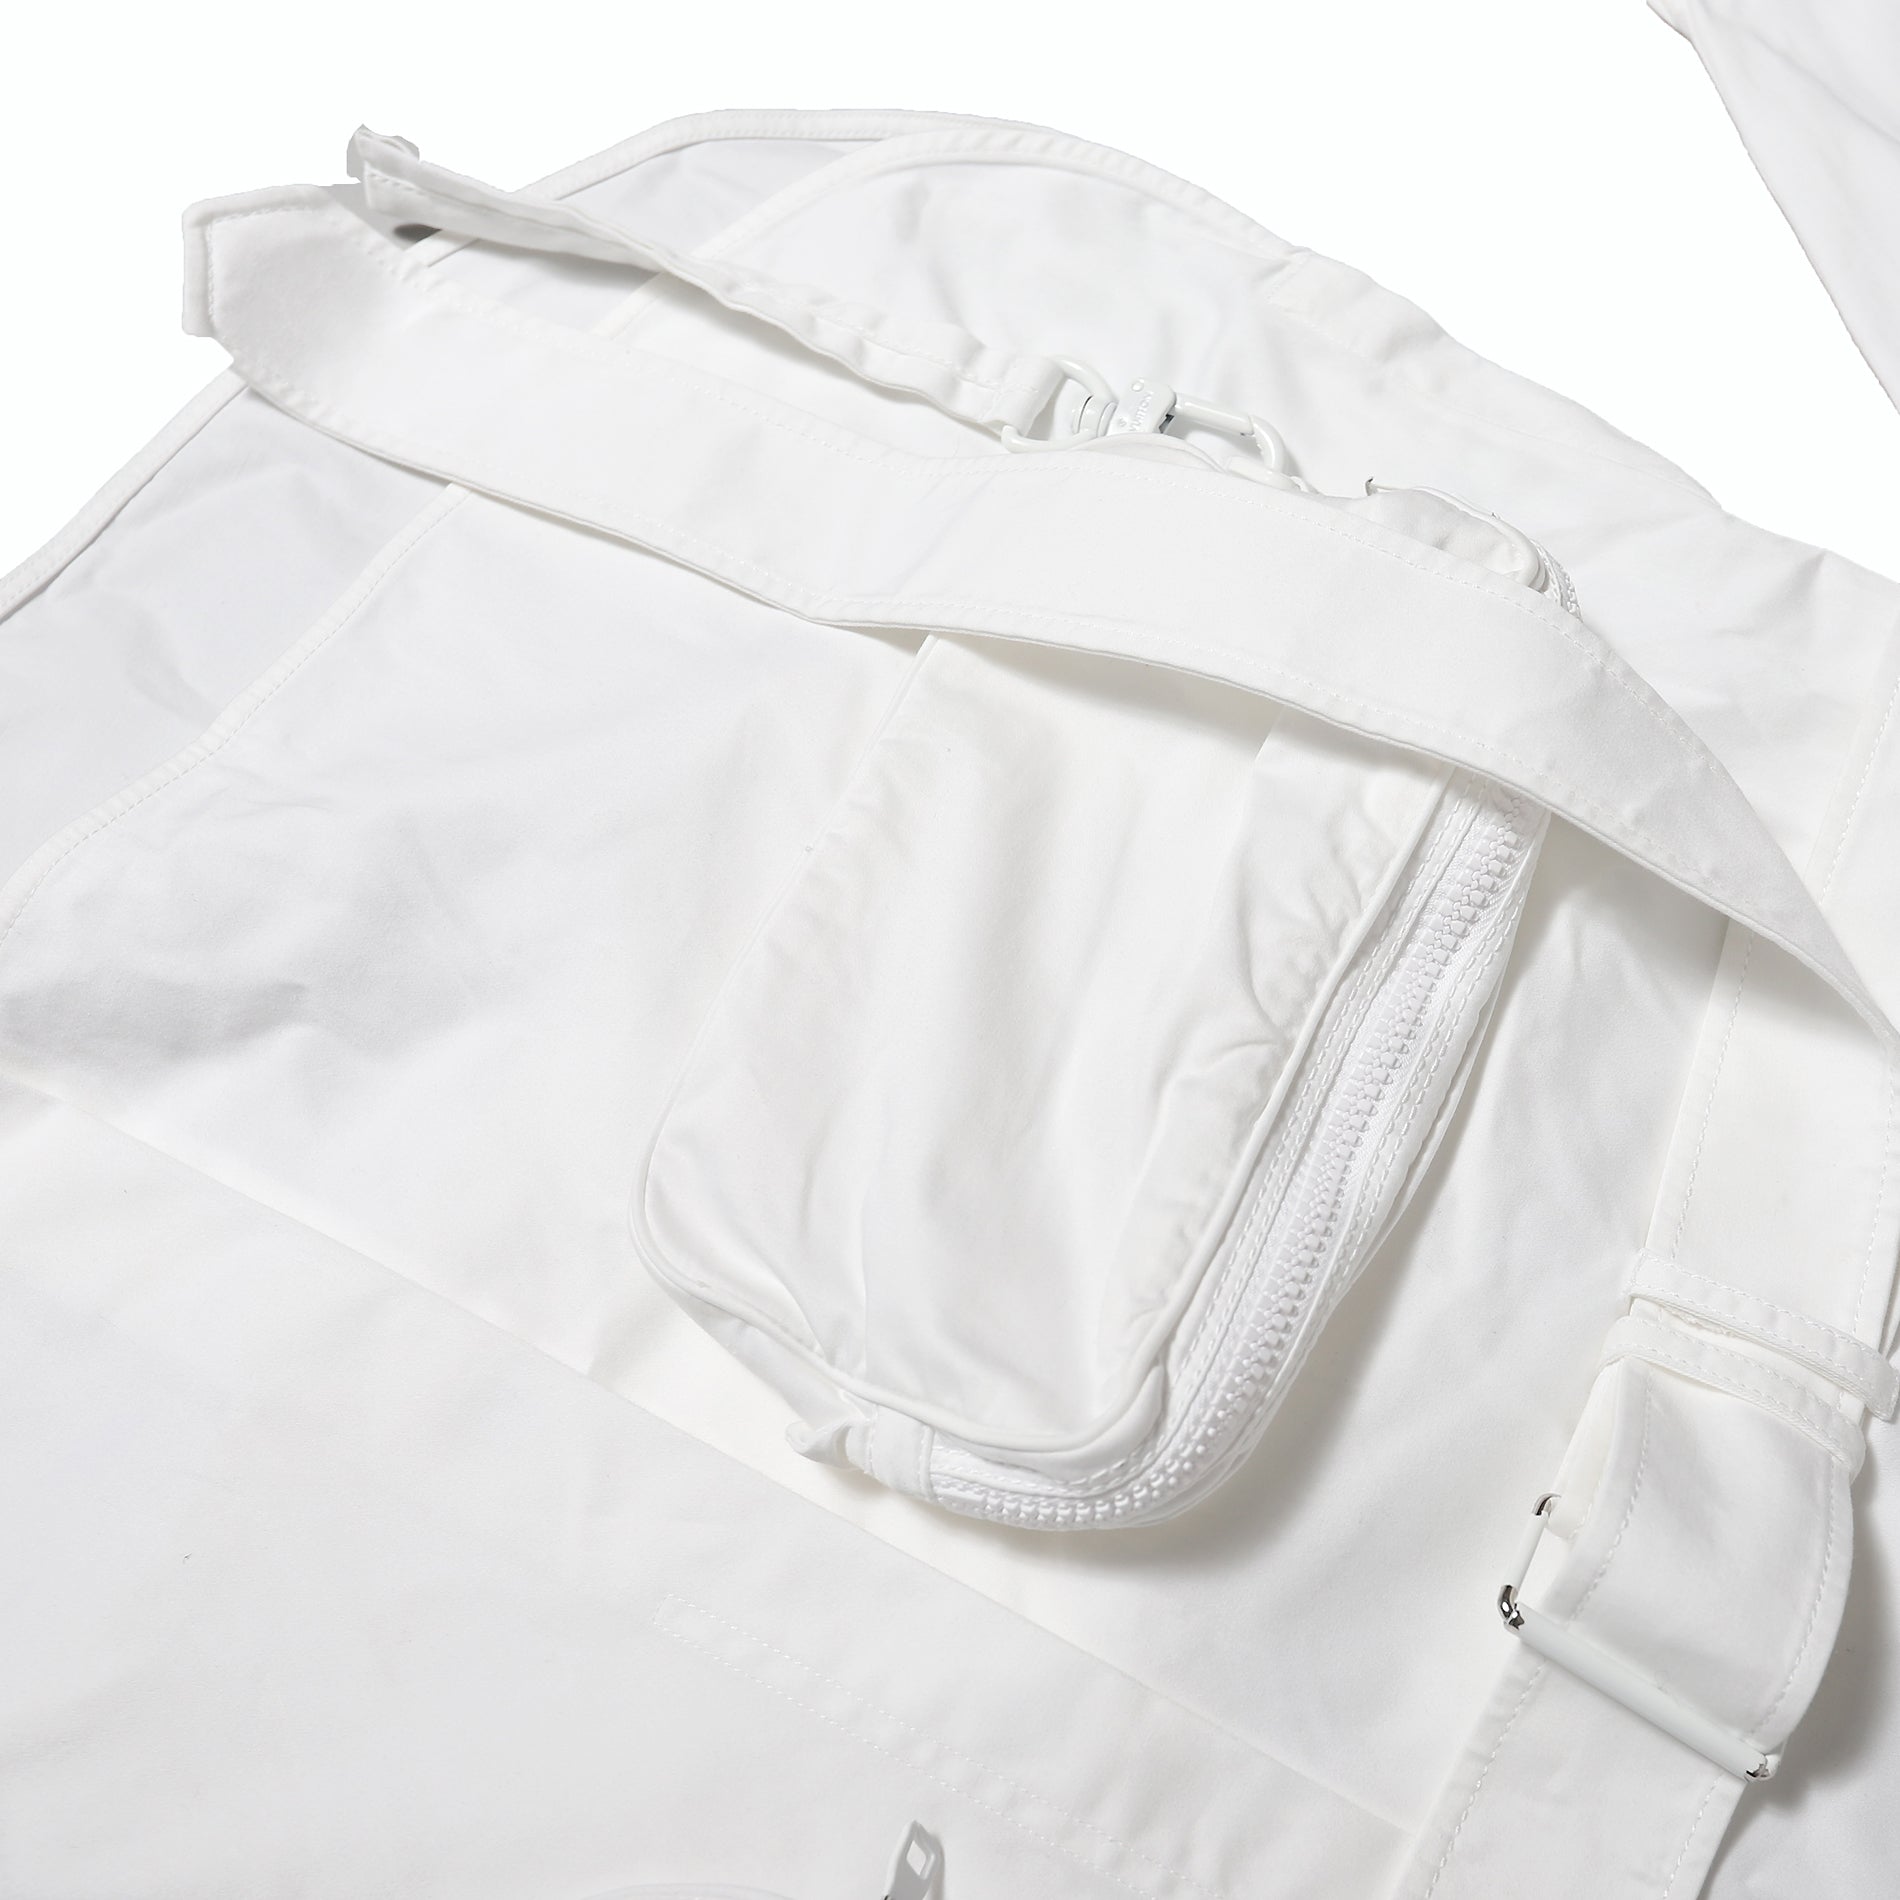 Louis Vuitton SS19 Plain Rainbow White Cargo Shirt - Ākaibu Store